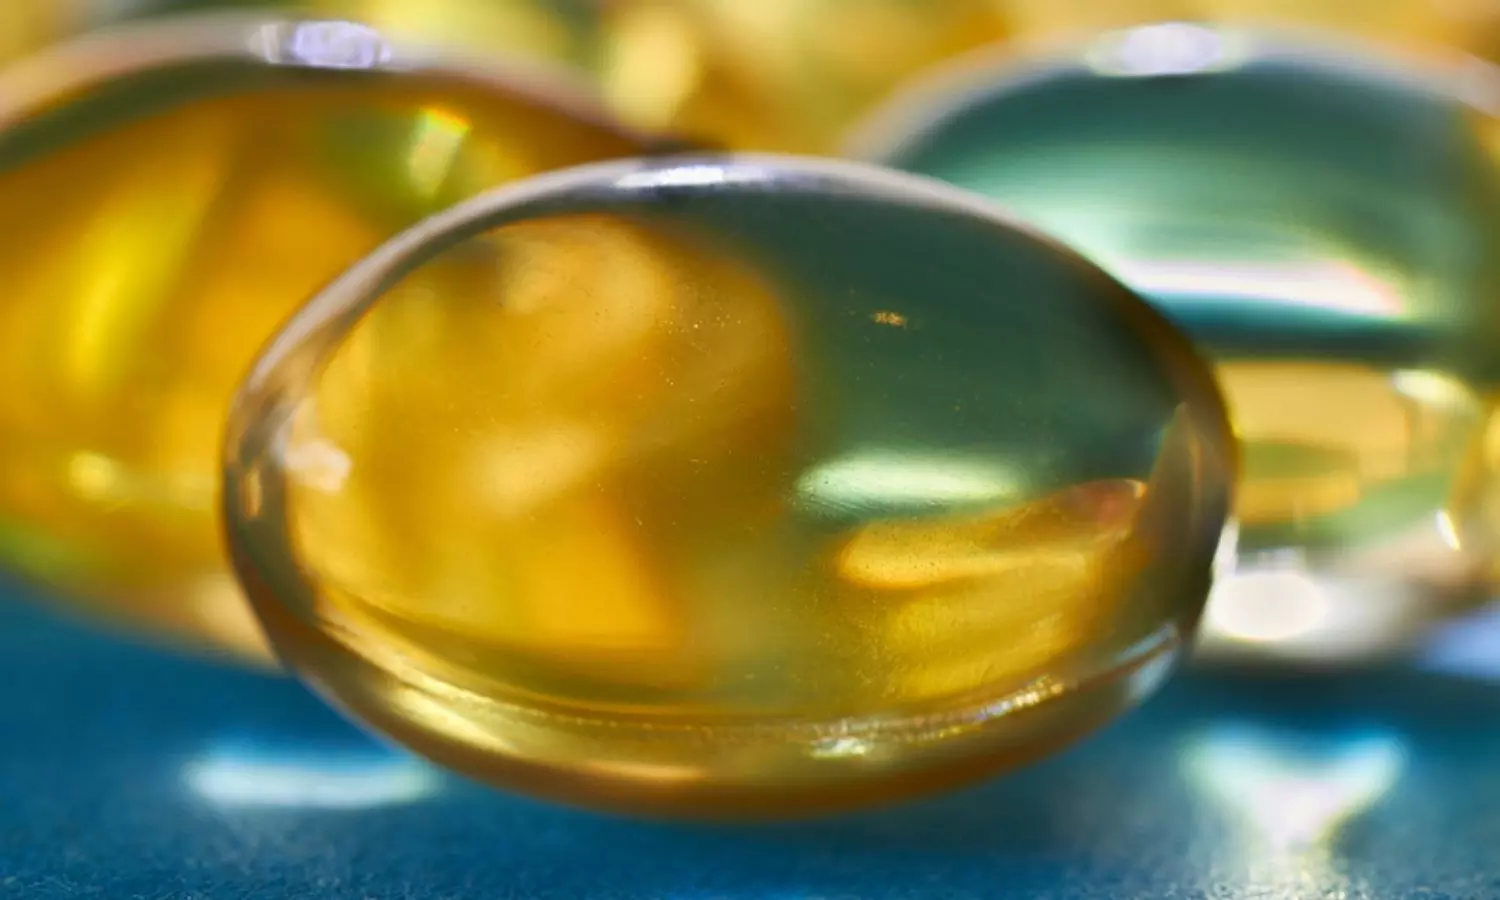 Novel omega-3 krill oil reduces triglyceride levels in hypertriglyceridemia: JAMA